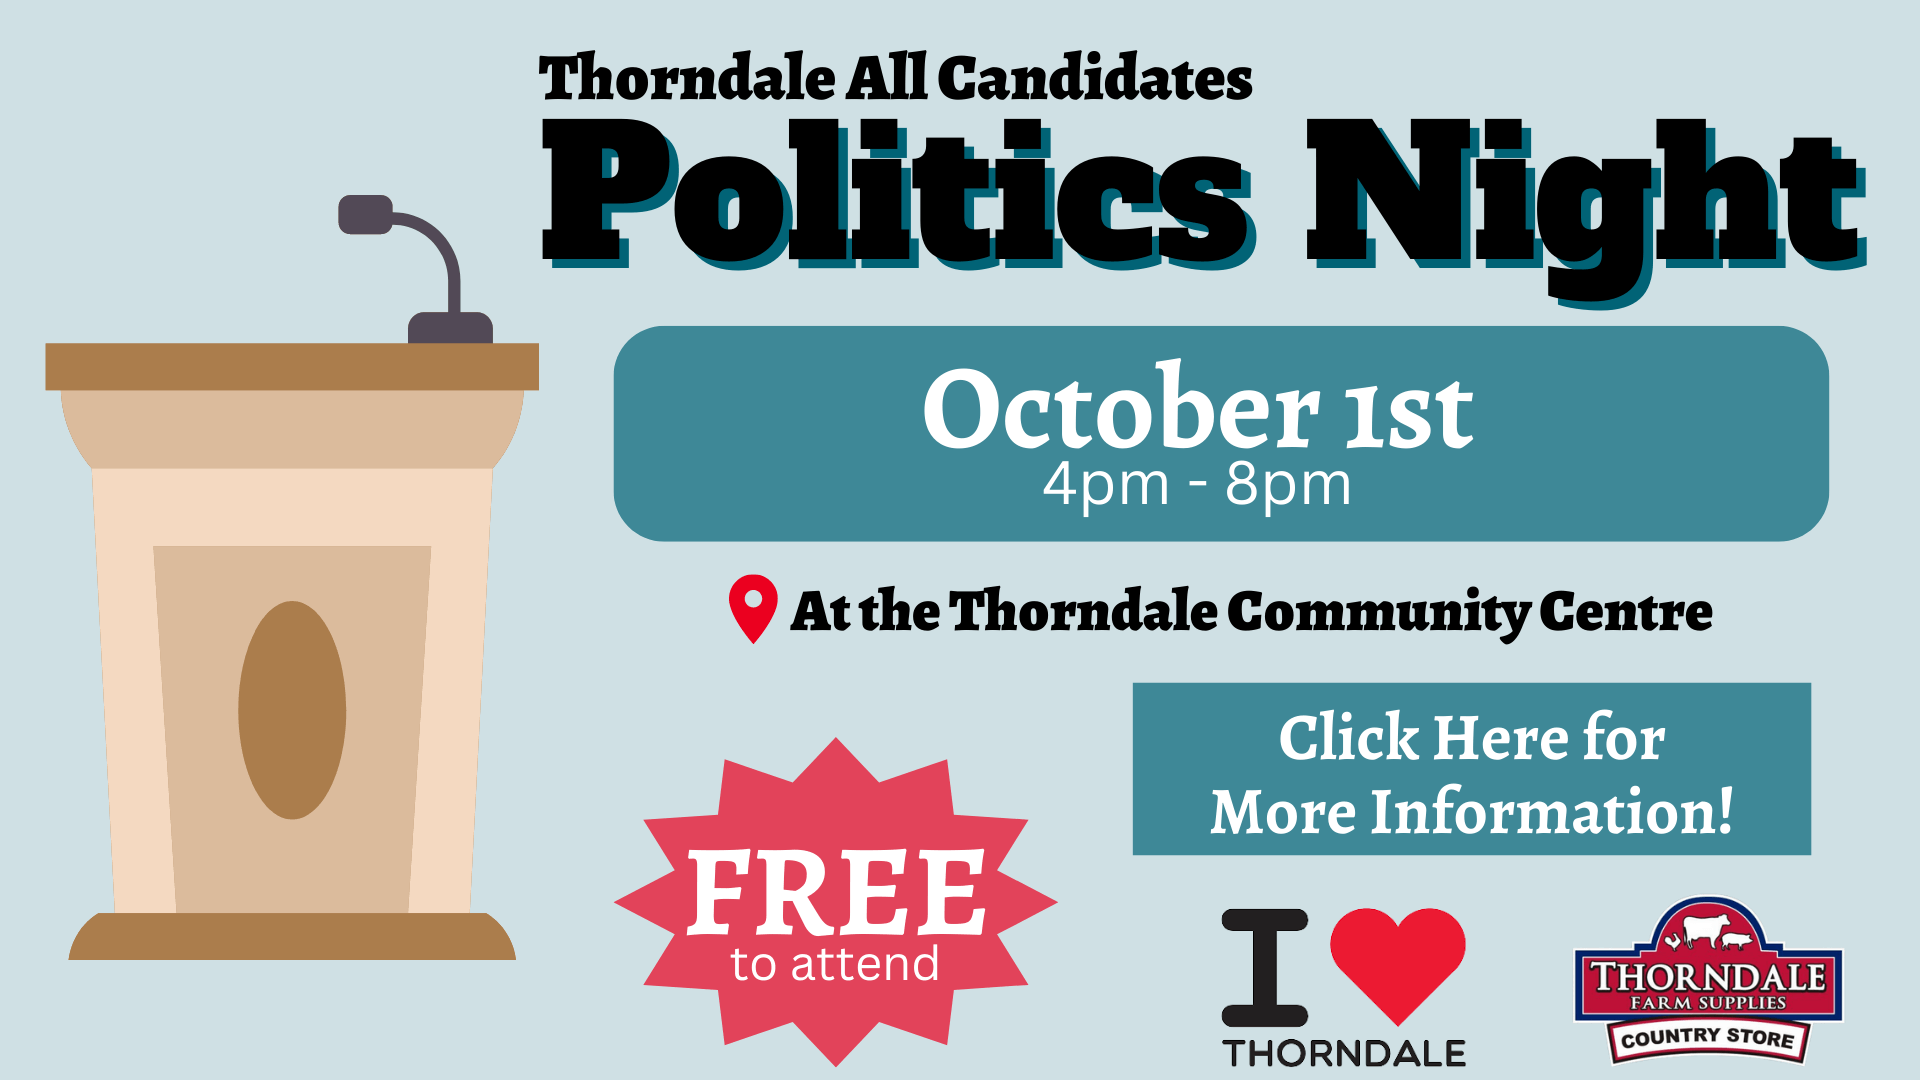 Thorndale All Candidates Politics Night